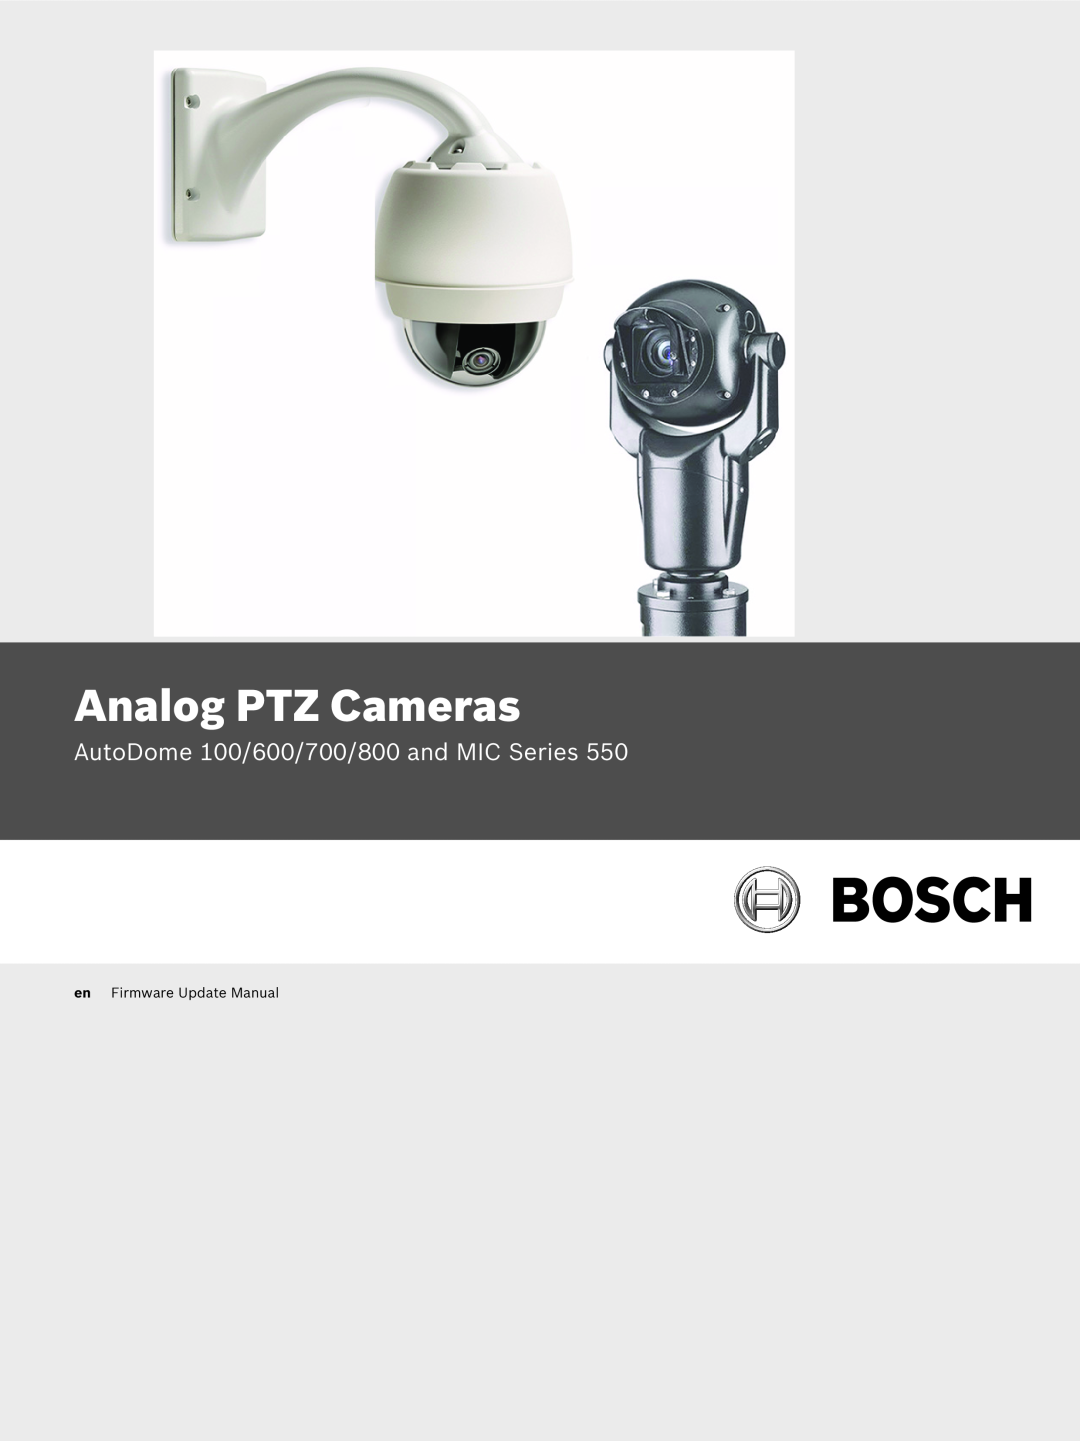 Bosch Appliances operation manual Divar 700 Series, en Installation and Operation manual 